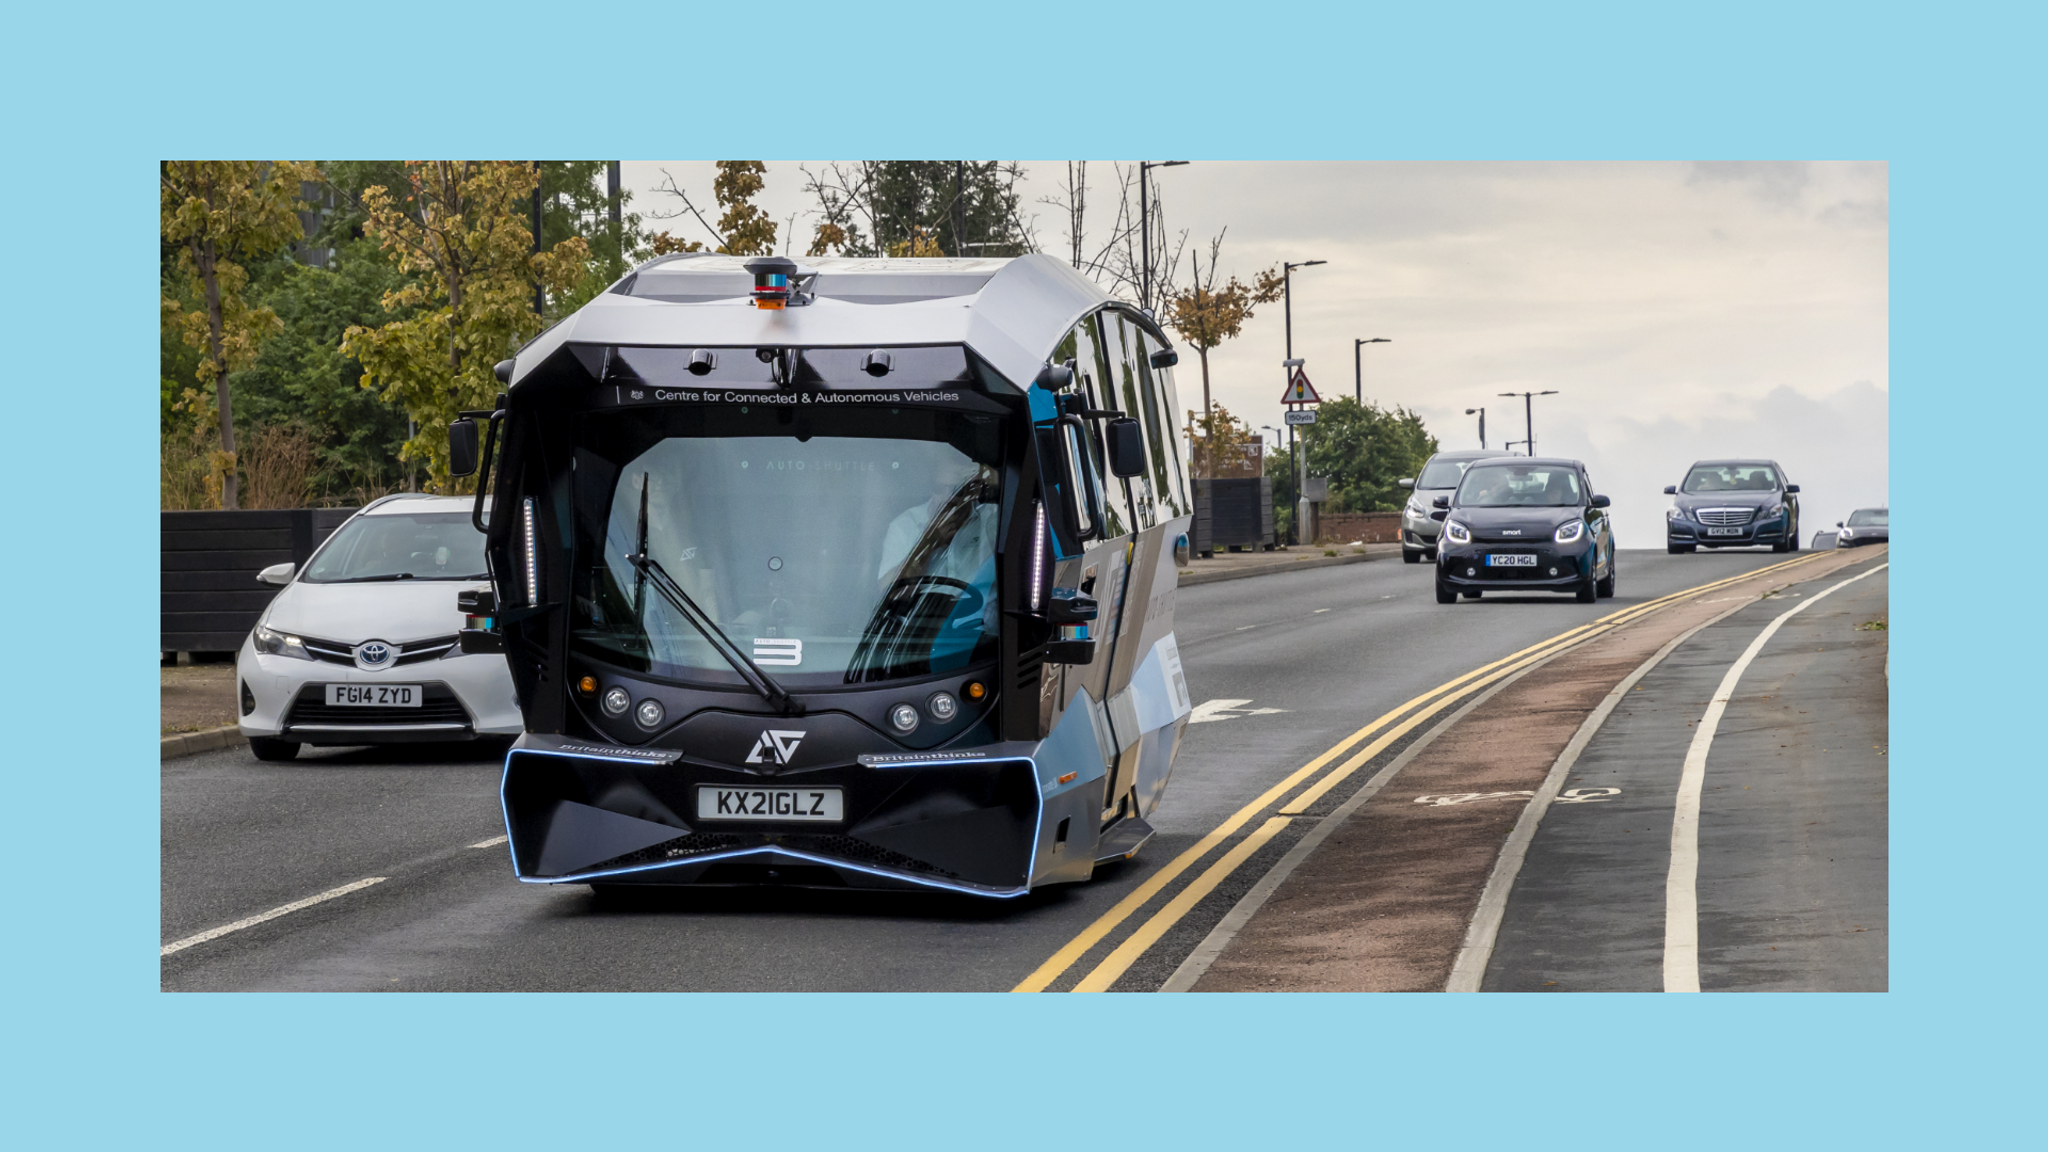 Futuristic bus driving on main road